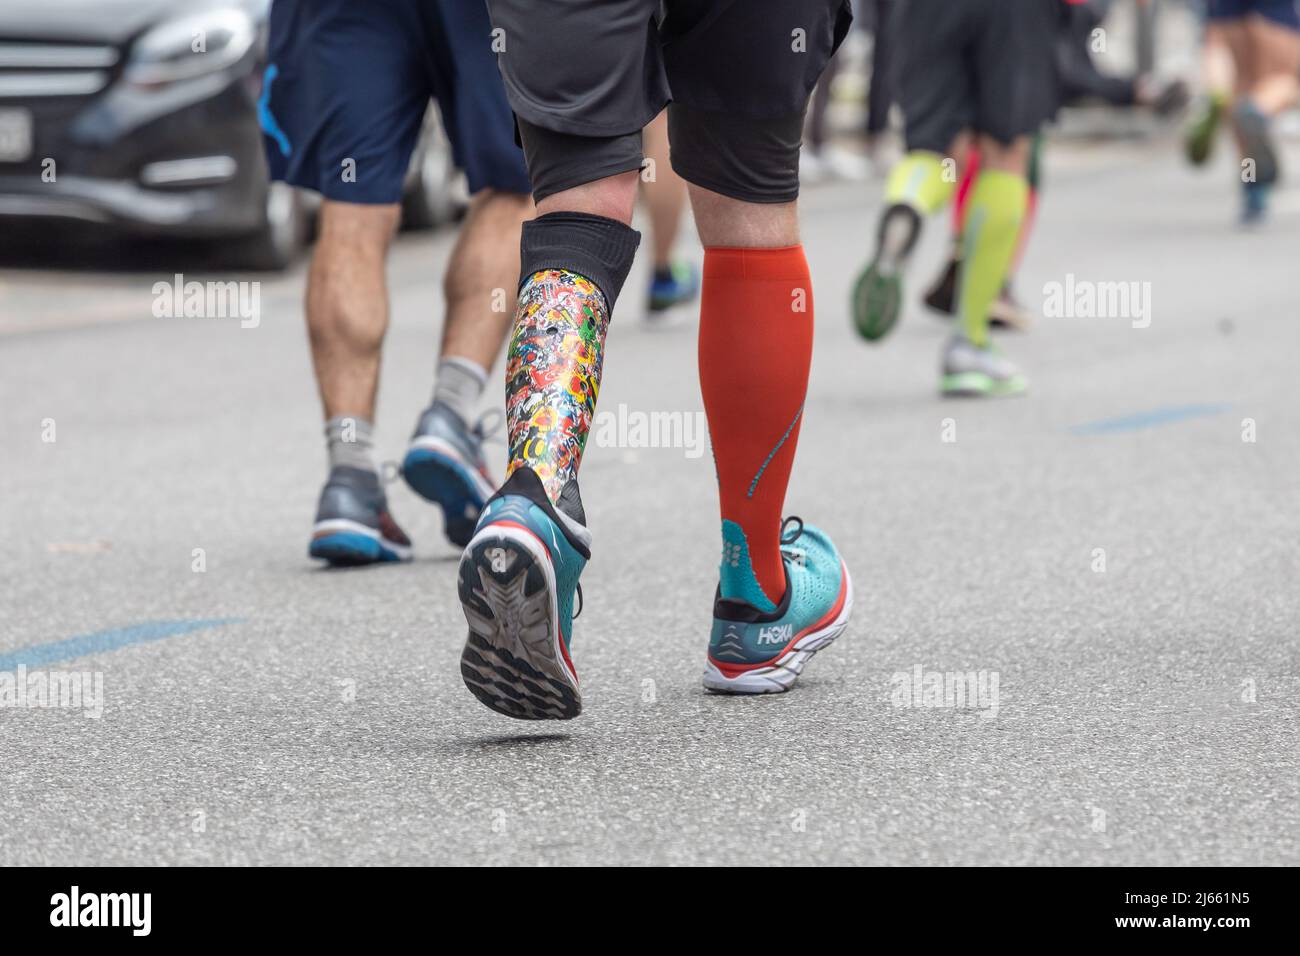 runner with lower leg prosthesis at marathon Stock Photo